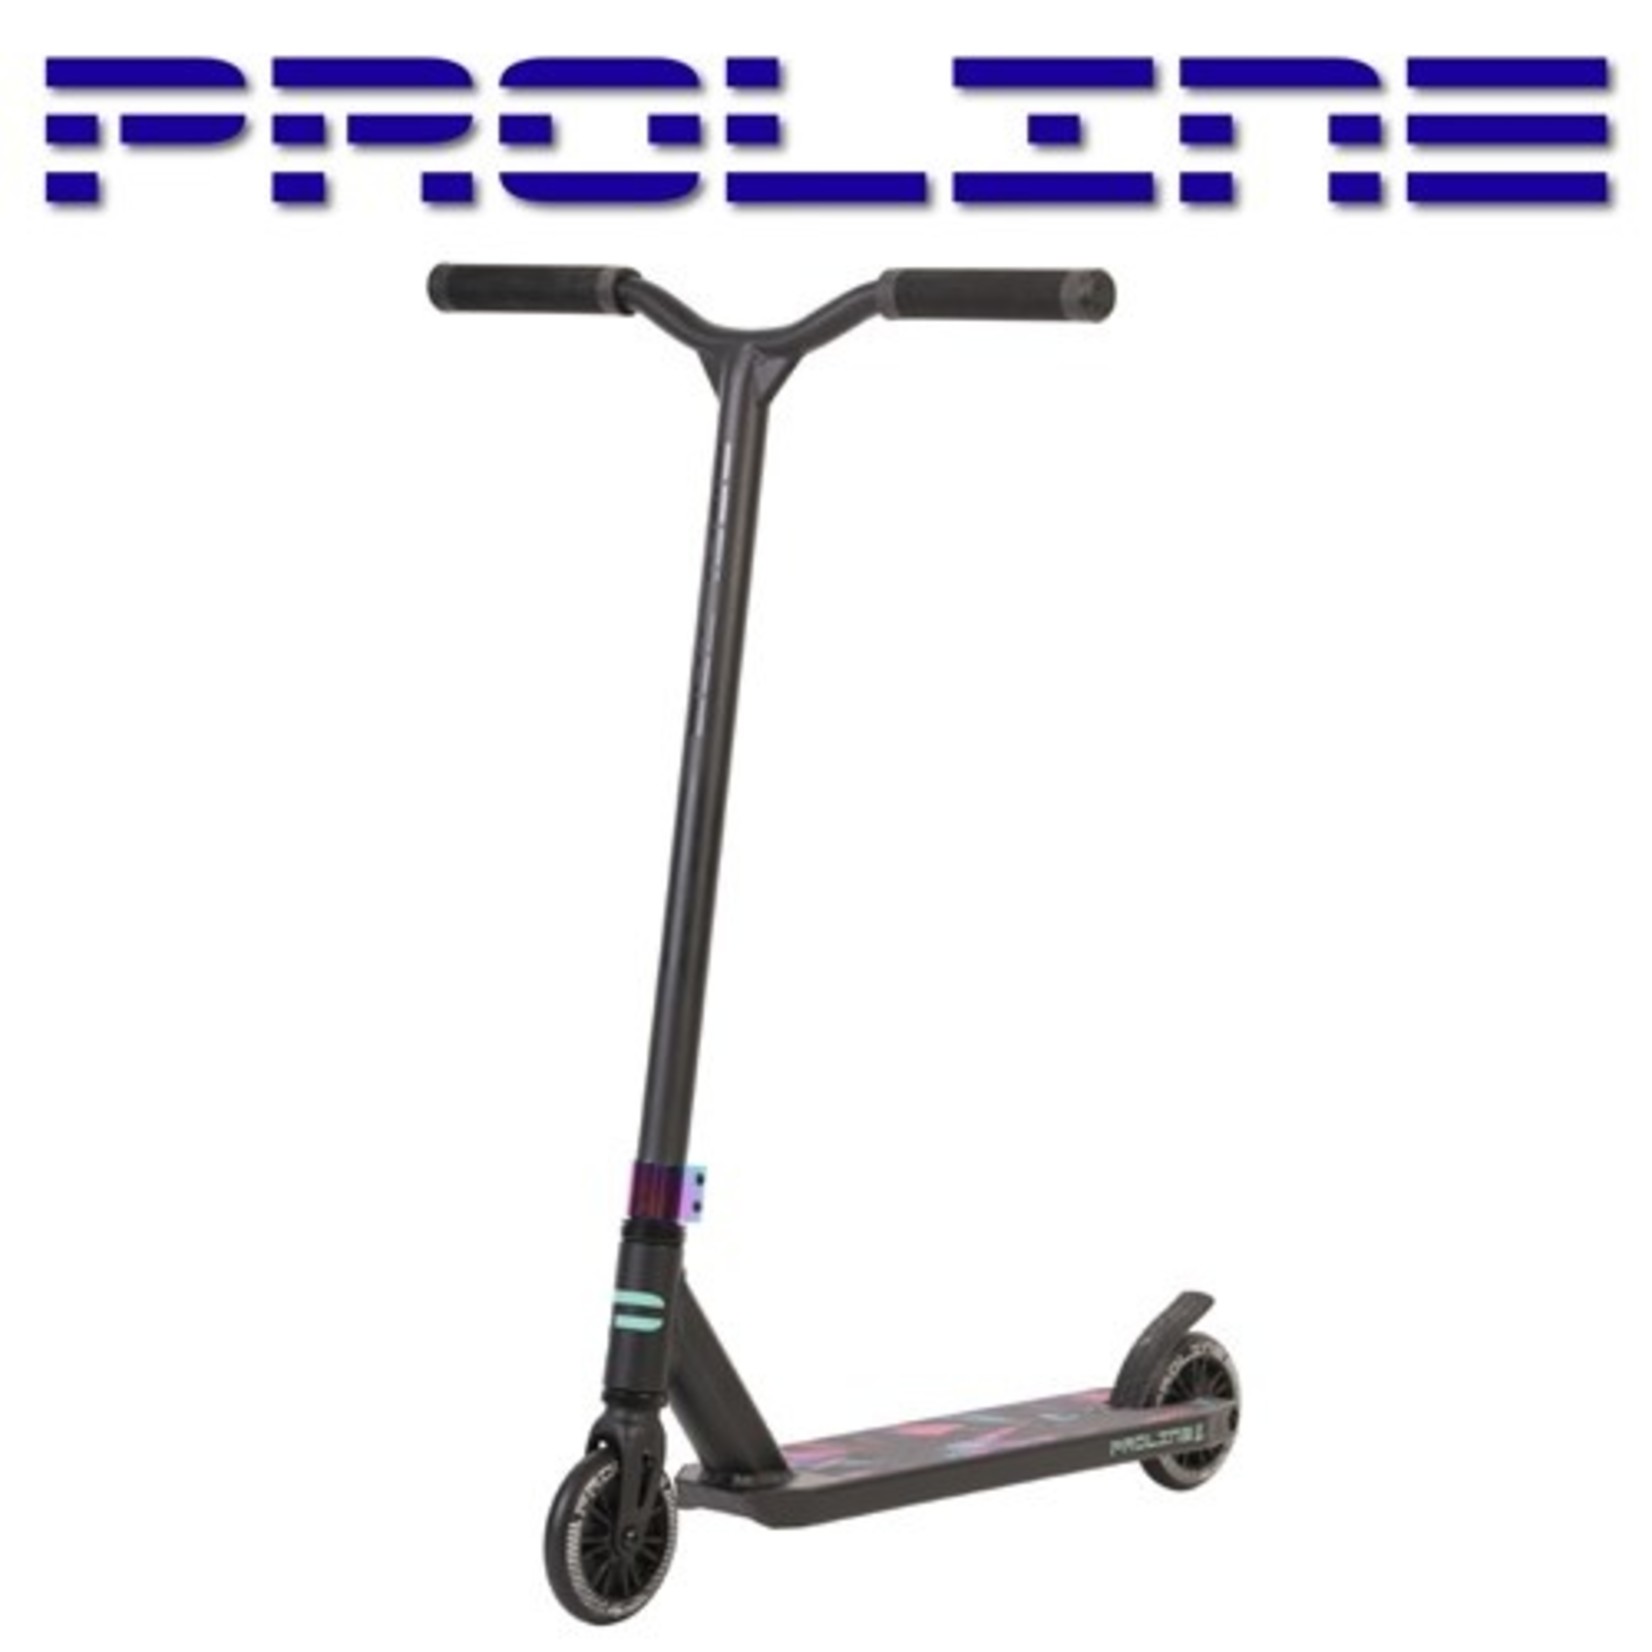 Proline Proline Scooter L1 V2 Series - Channelled Alloy Deck 110 X 495mm - Black Neo